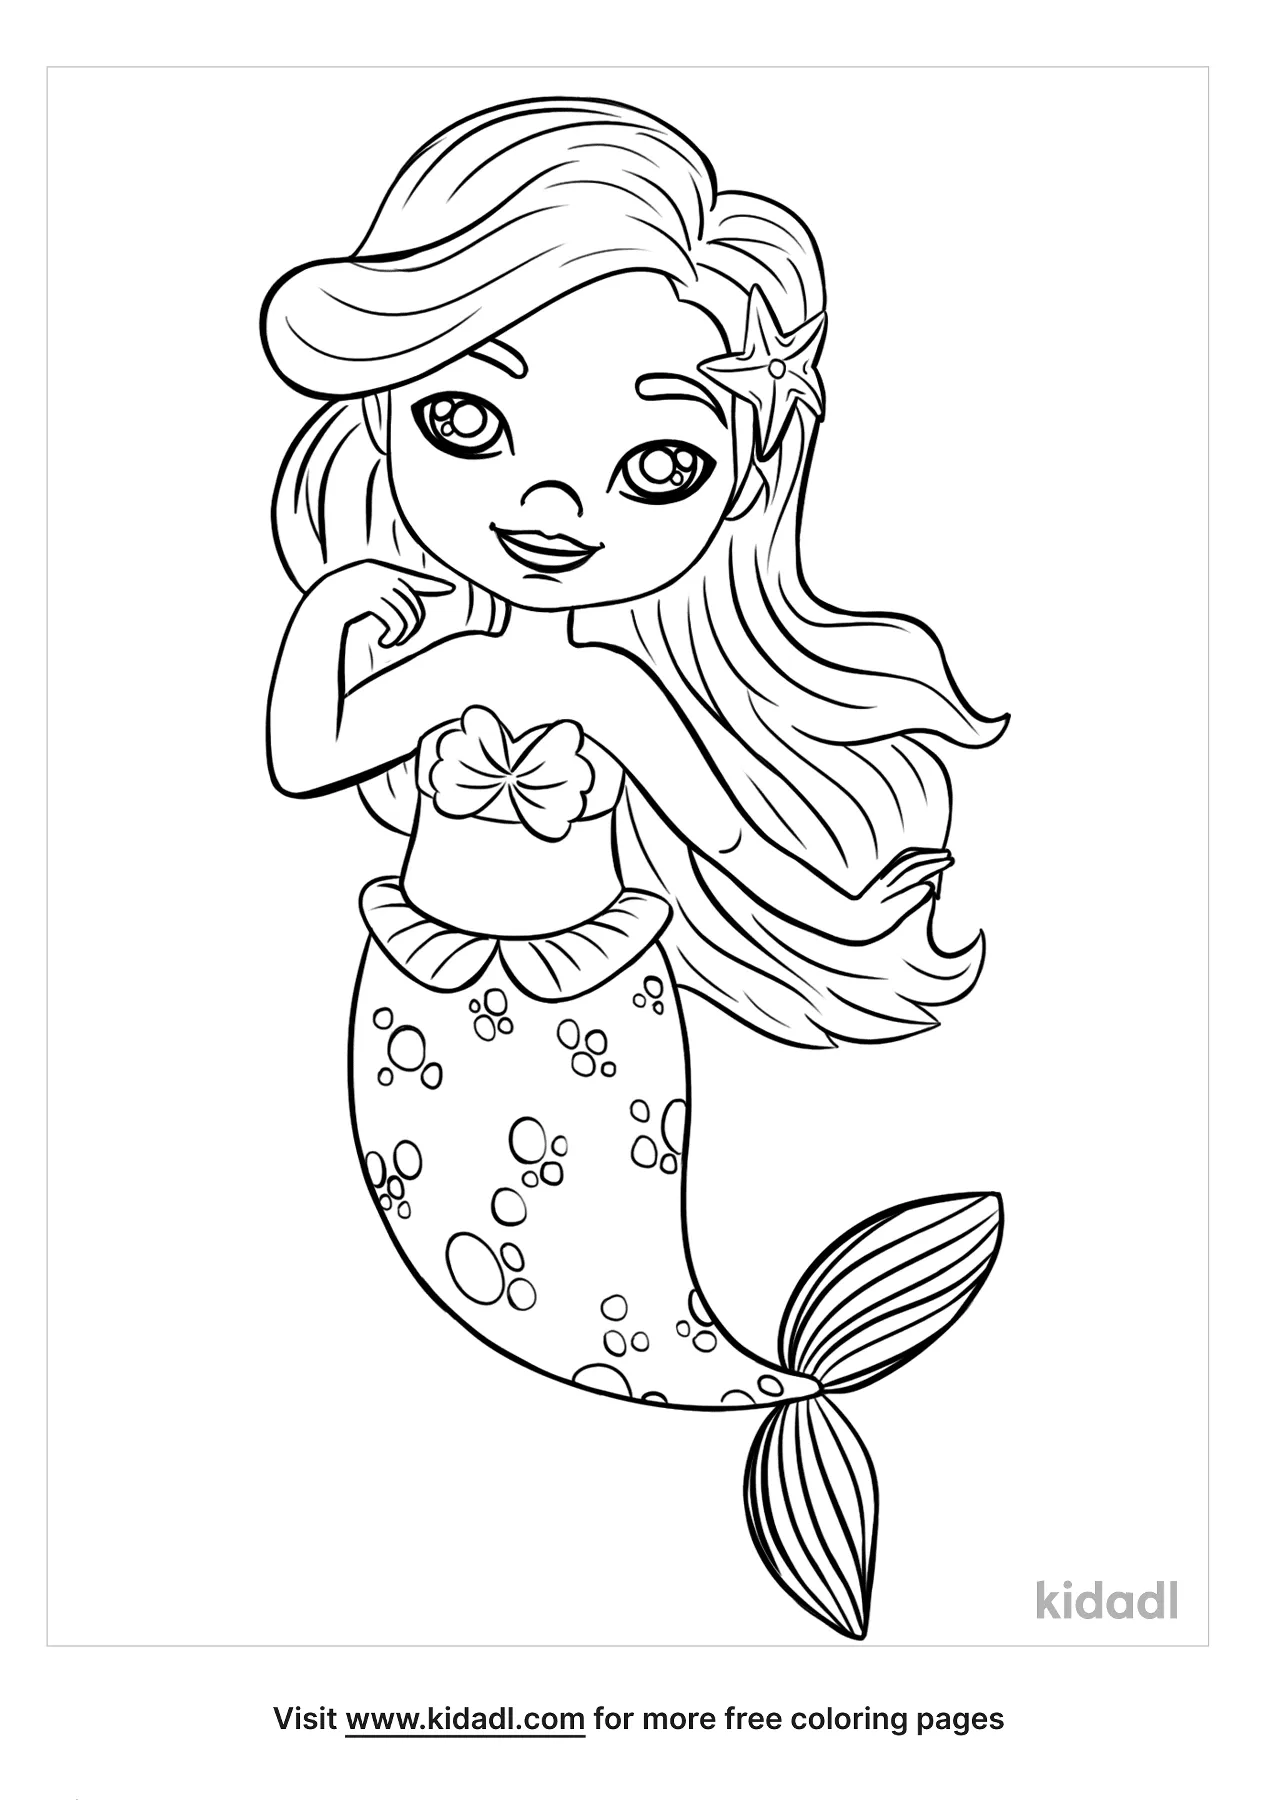 Baby Mermaid Coloring Pages Free Ocean Coloring Pages Kidadl